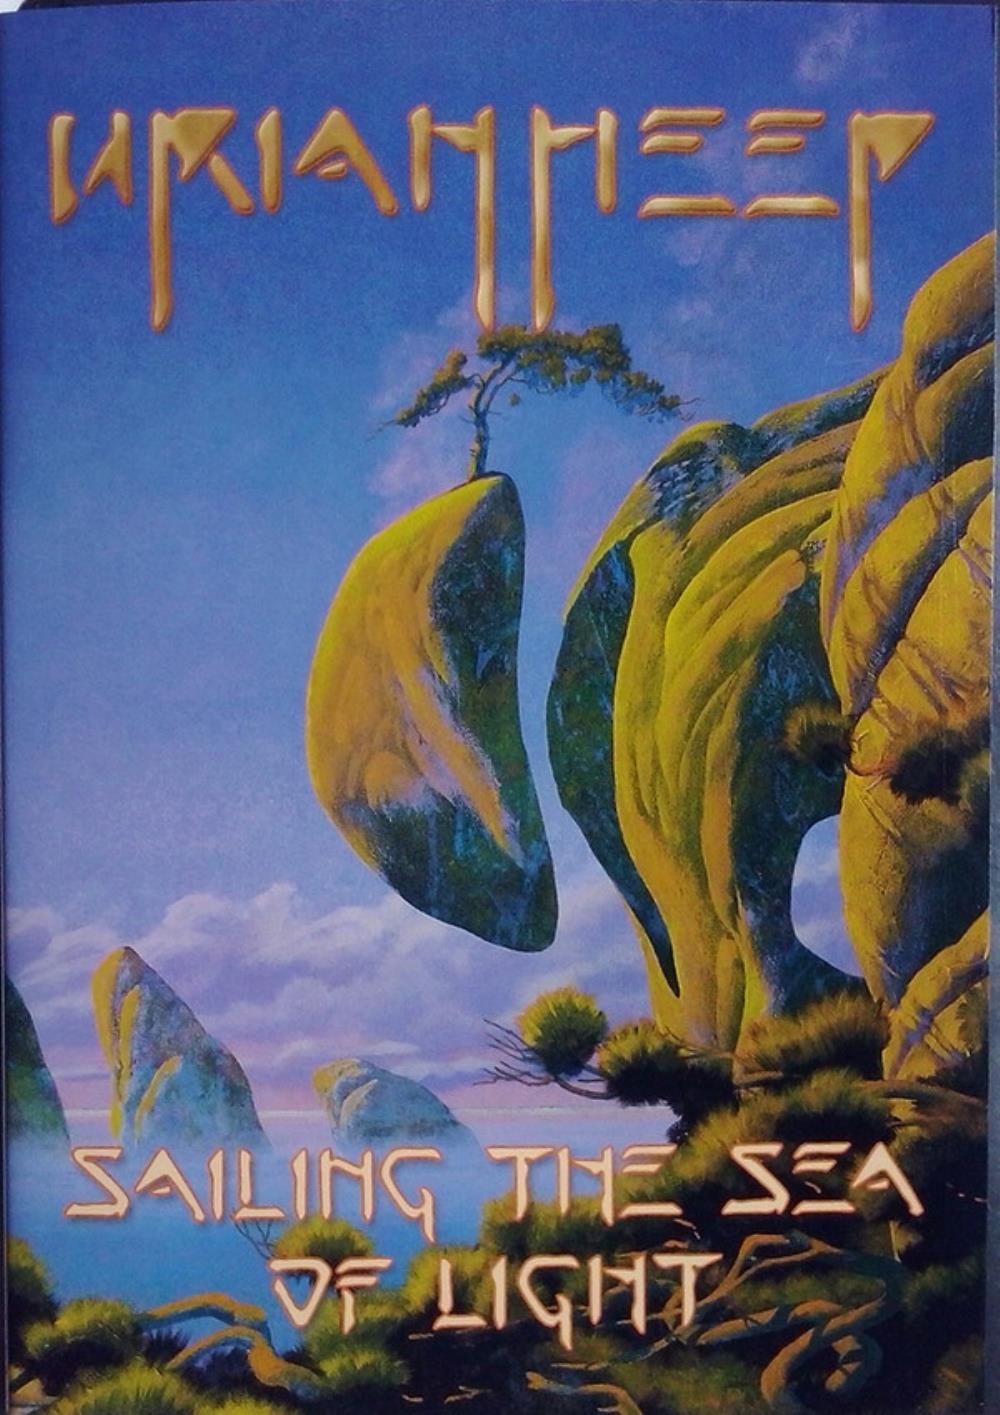 Uriah Heep Sailing The Sea Of Light album cover